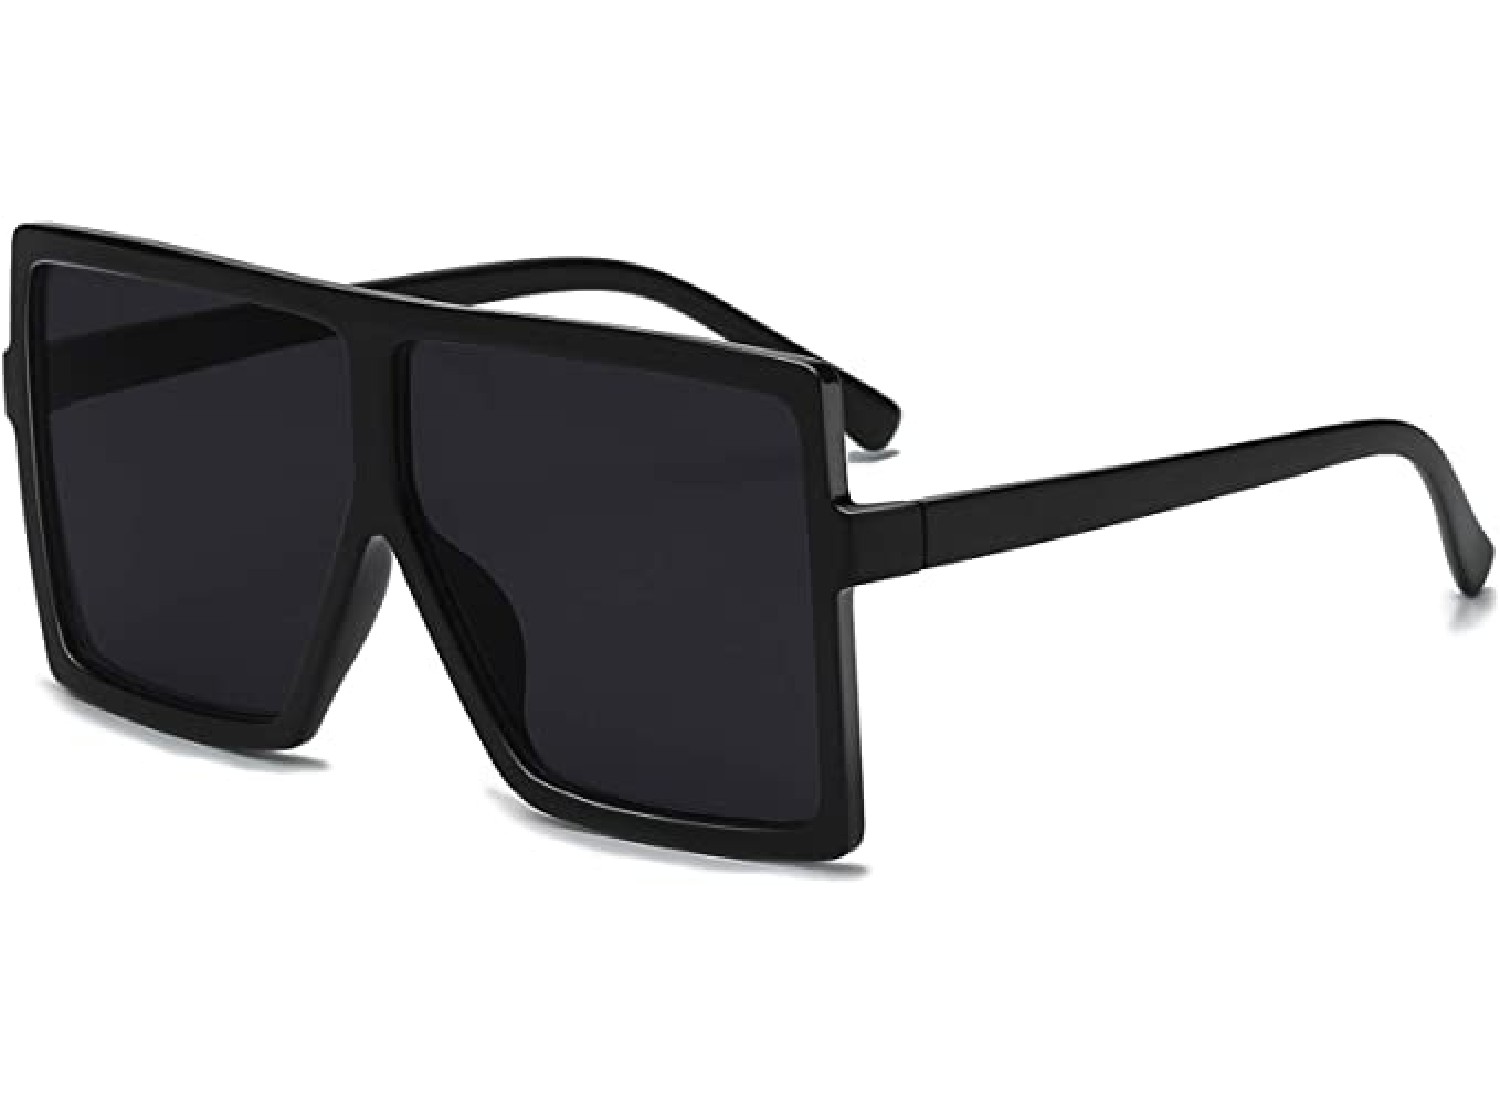 A pair of black, square sunglasses.